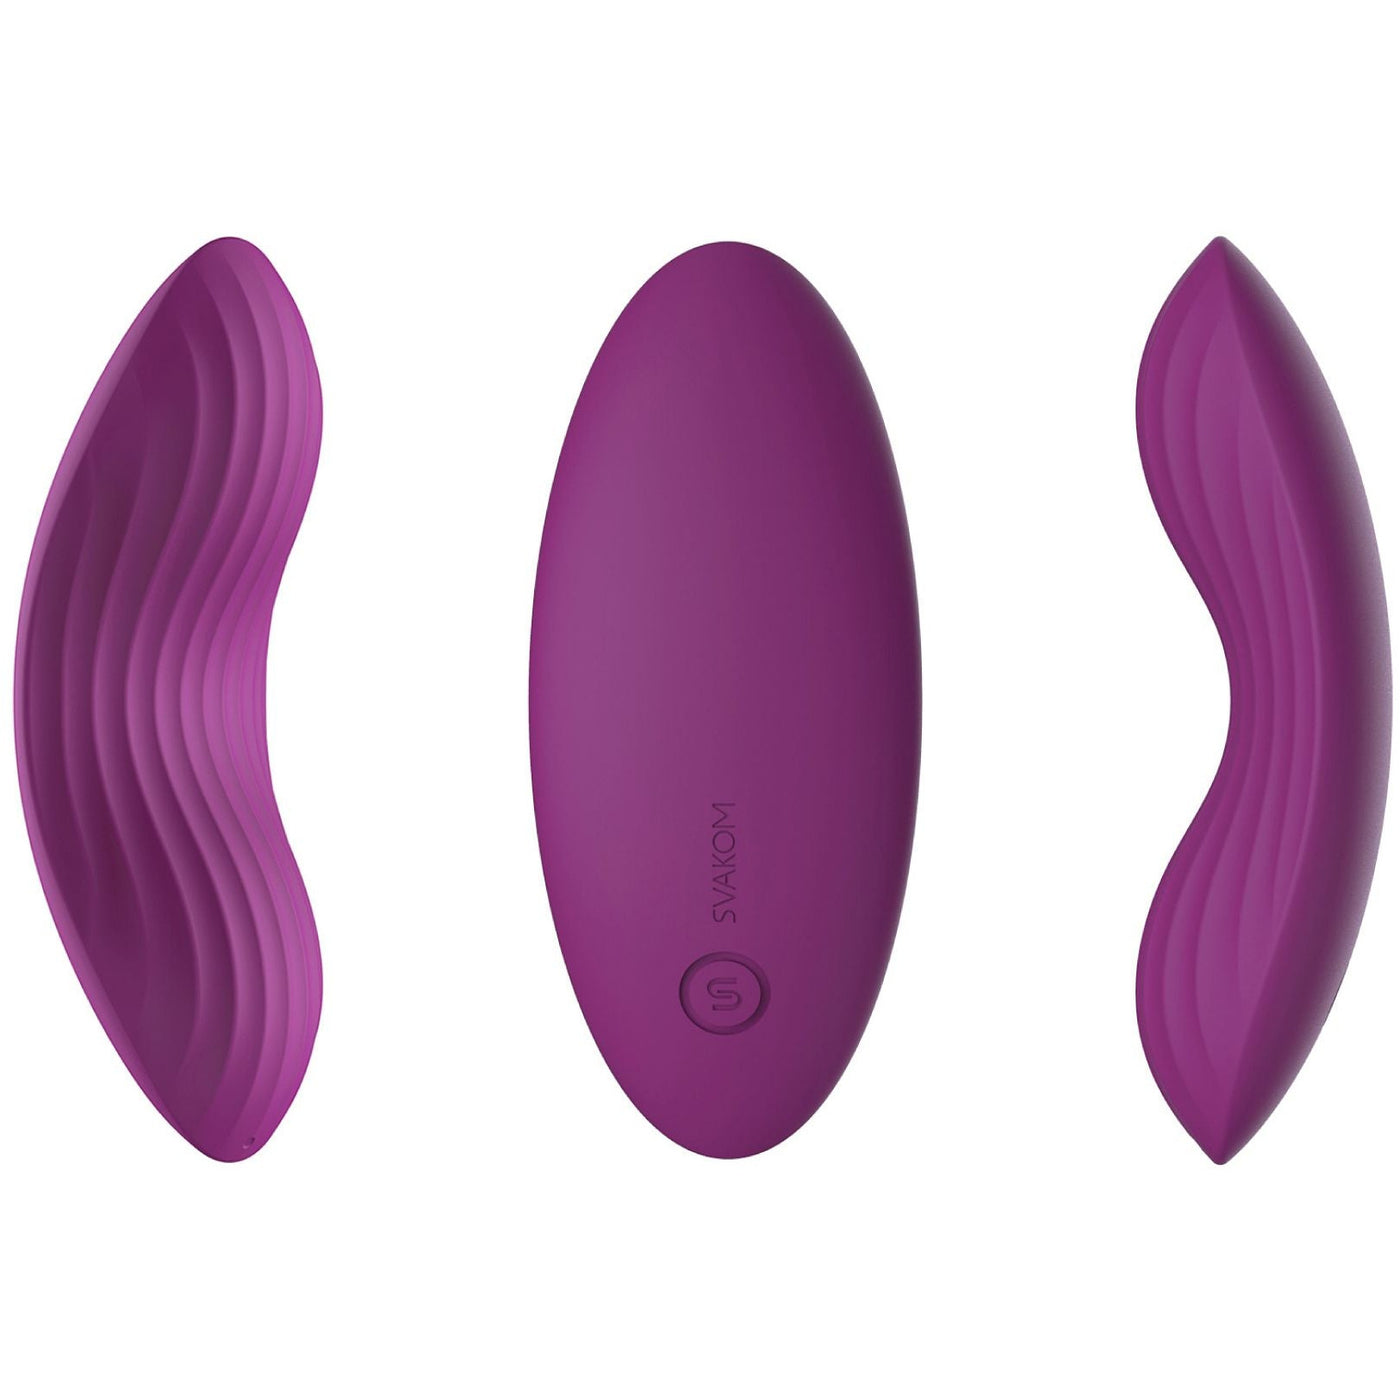 vakom-eden-app-controlled-clitoral-stimulator